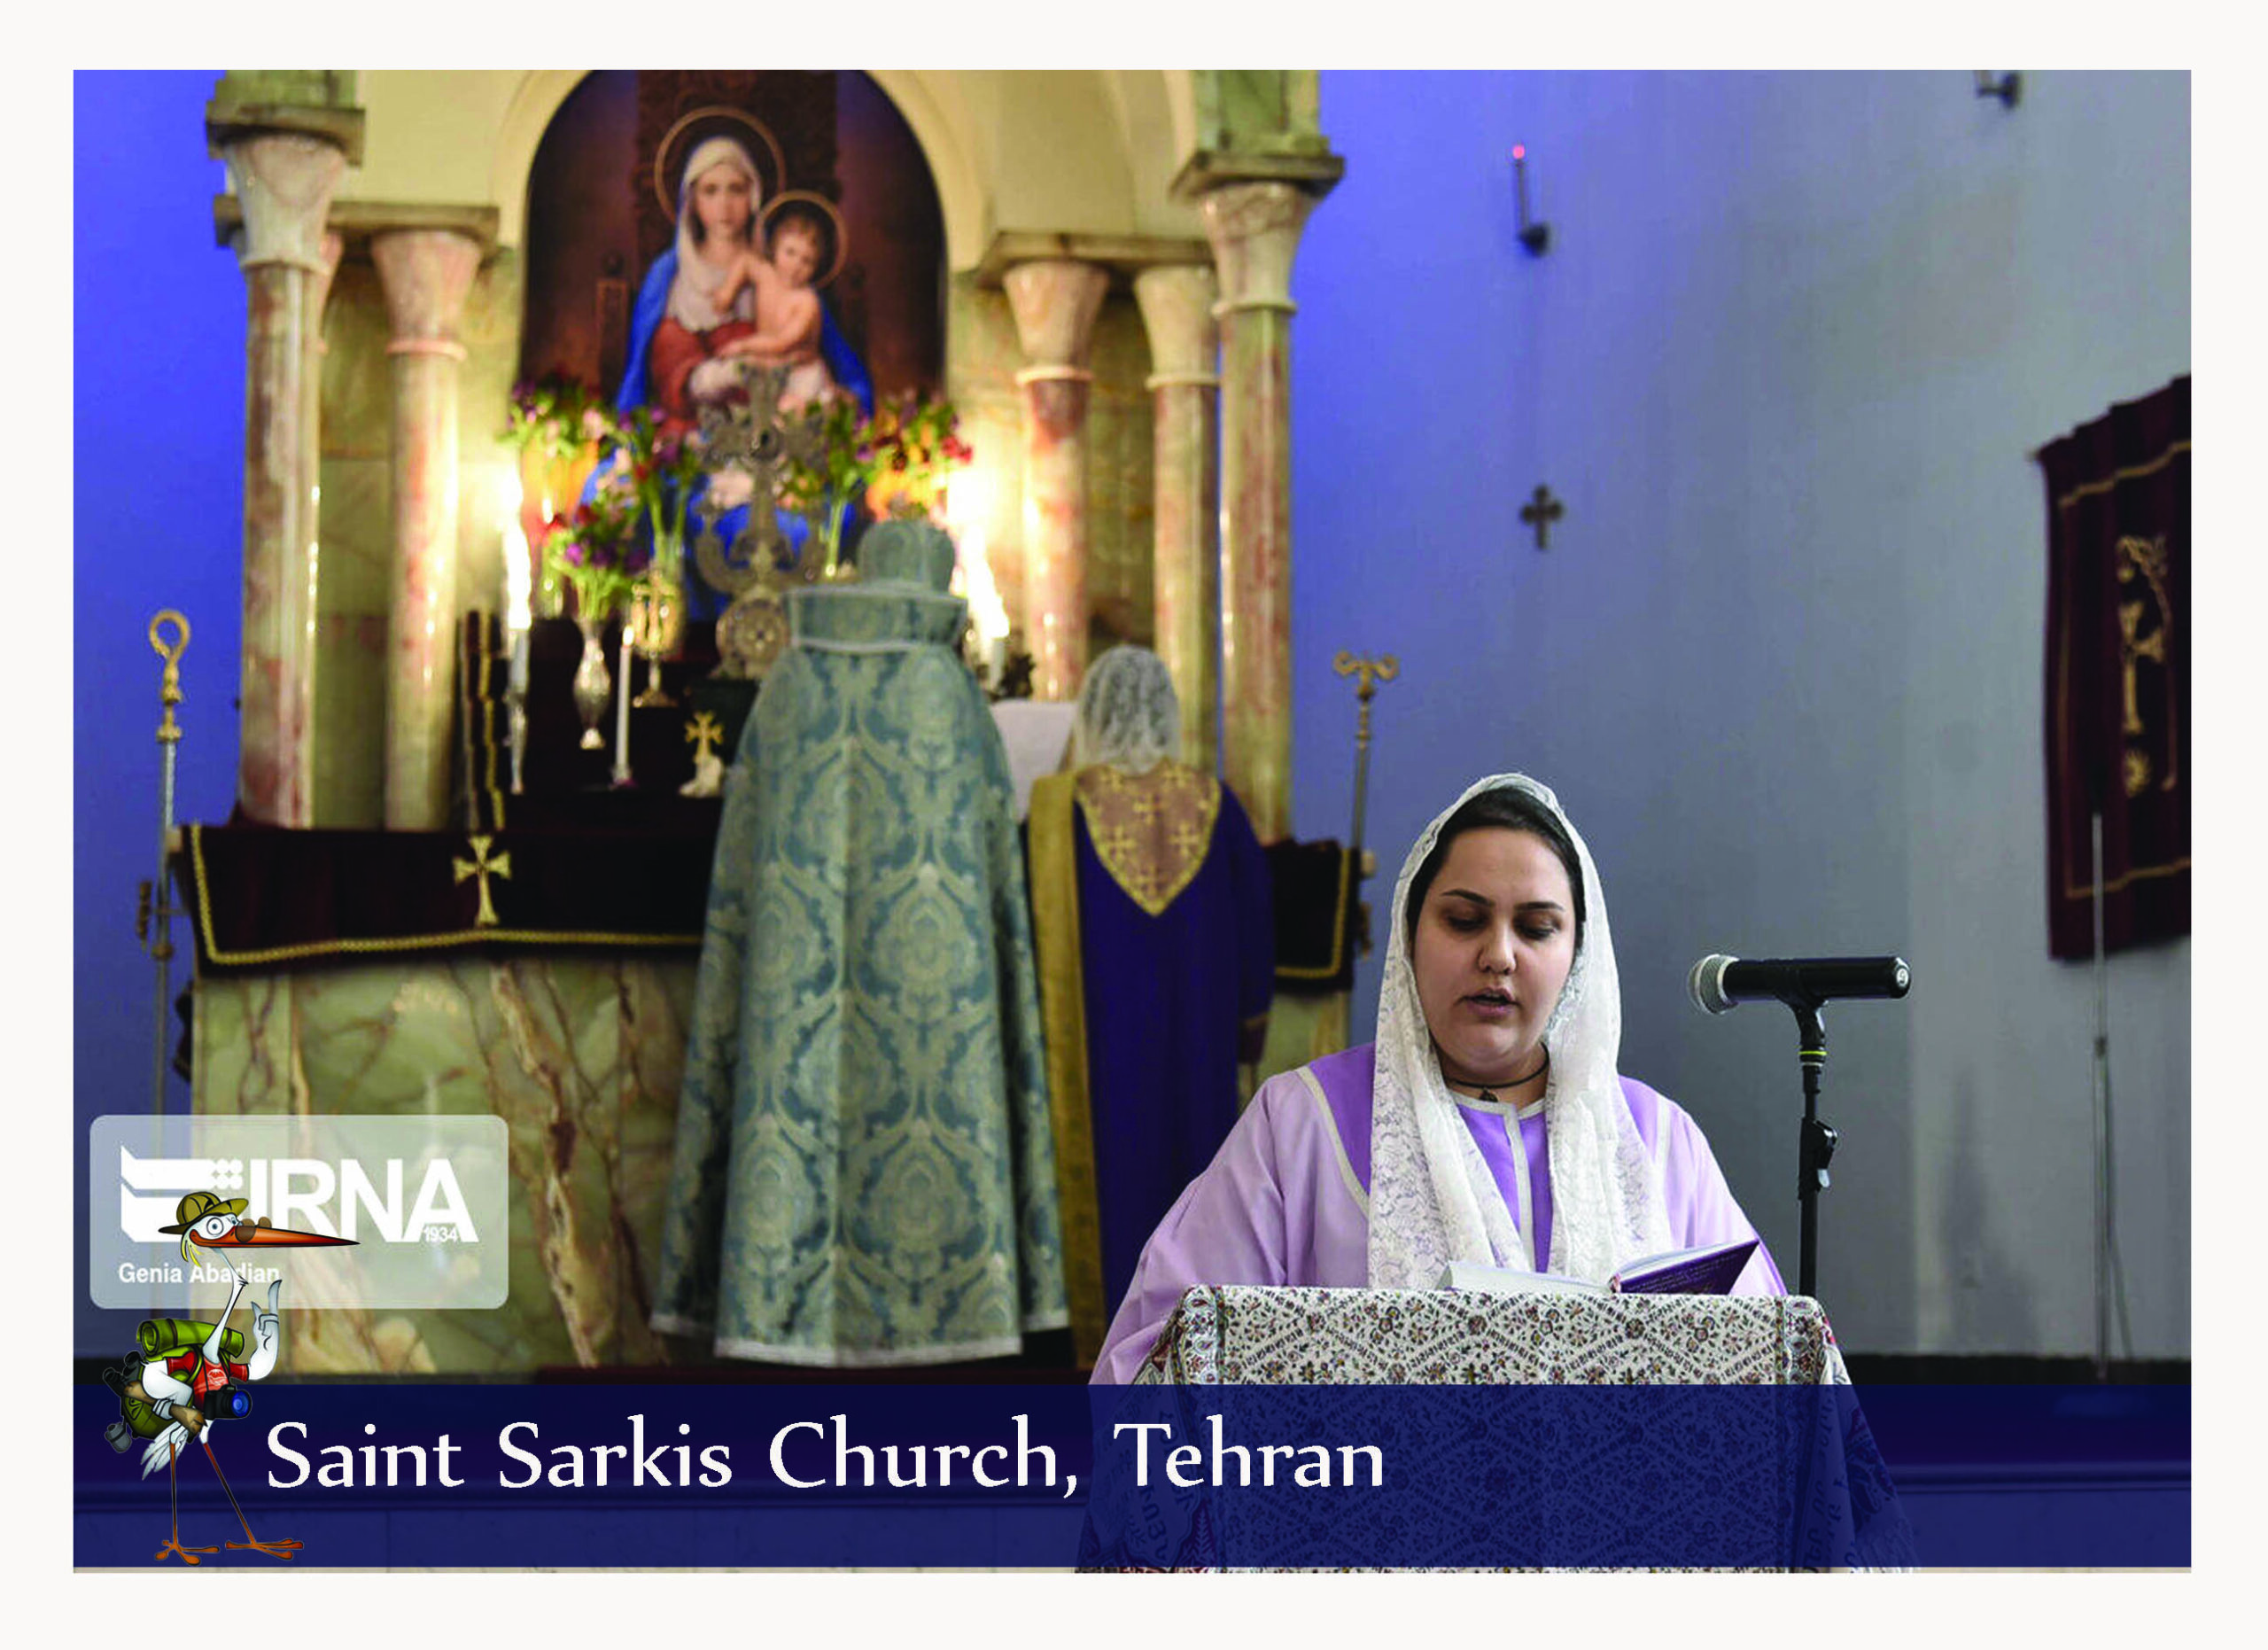 Saint Sarkis church OF Tehran